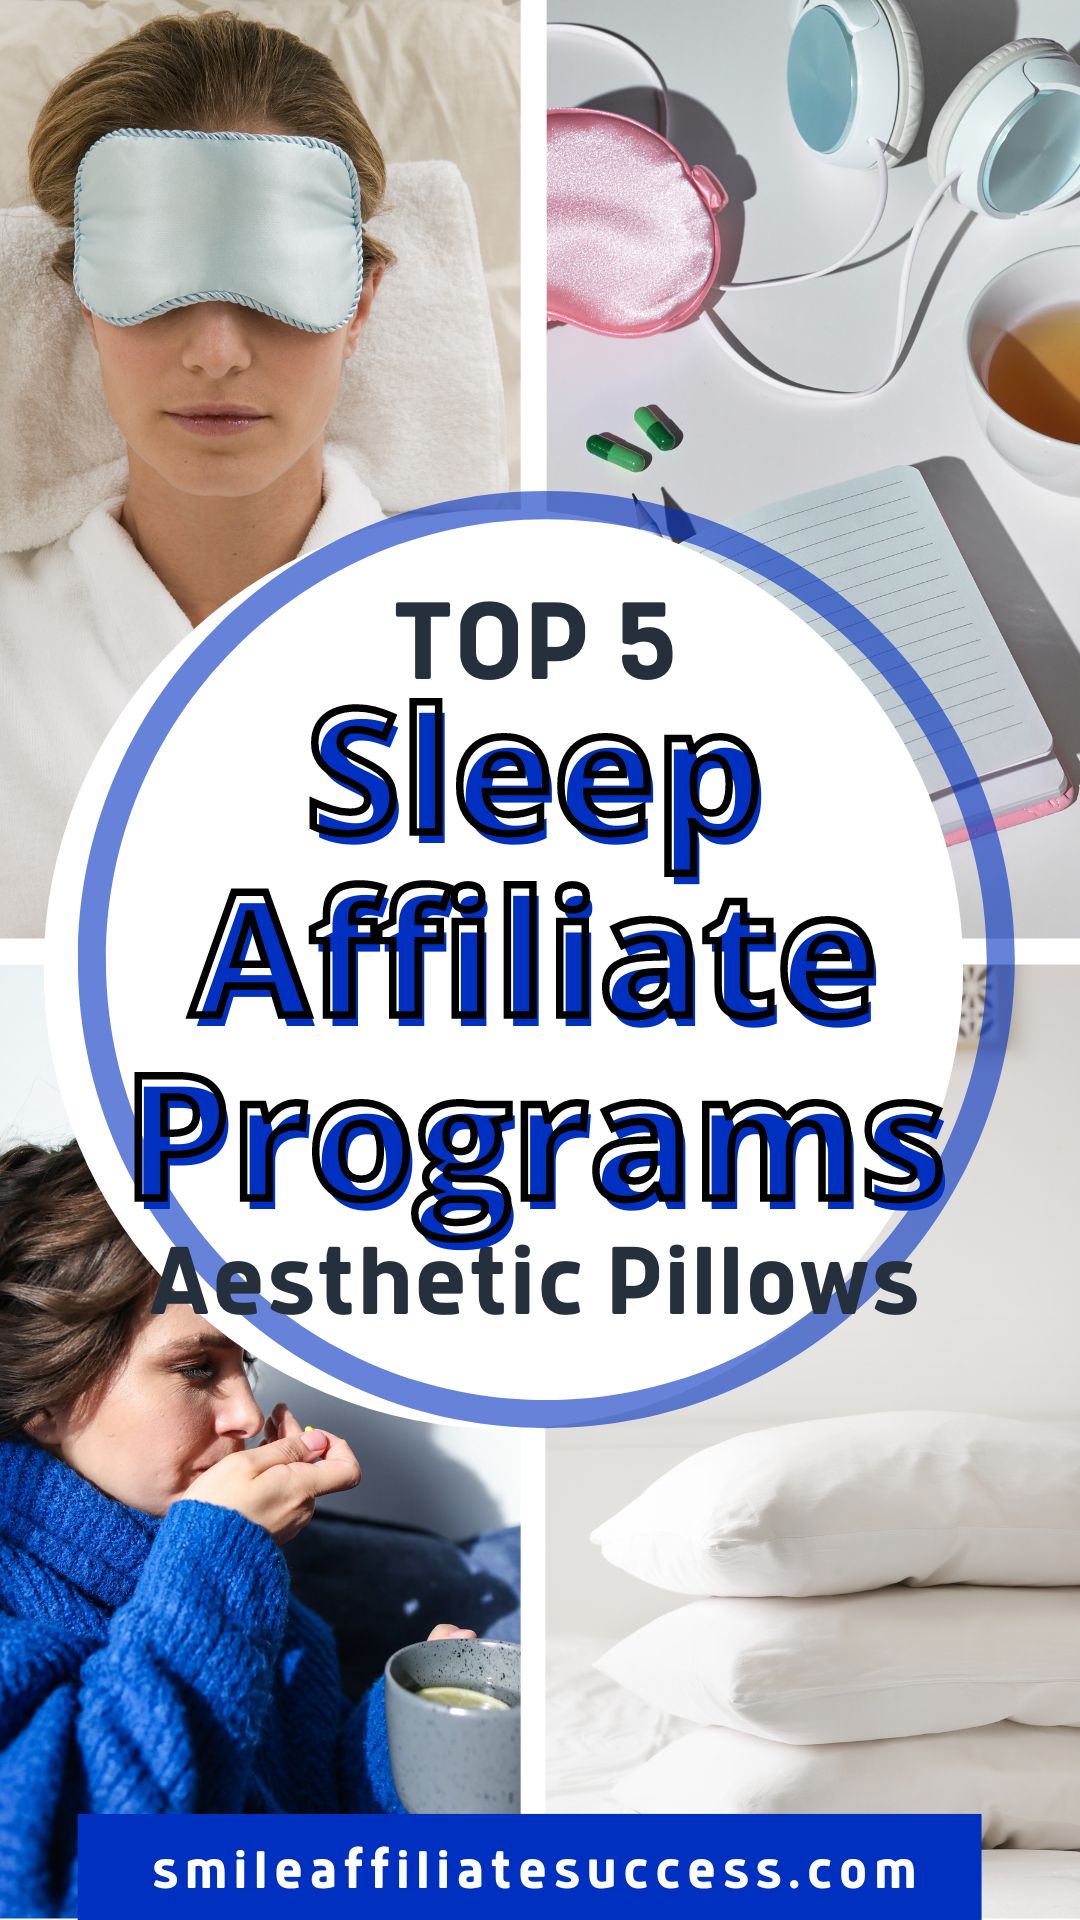 Top 5 Sleep Affiliate Programs